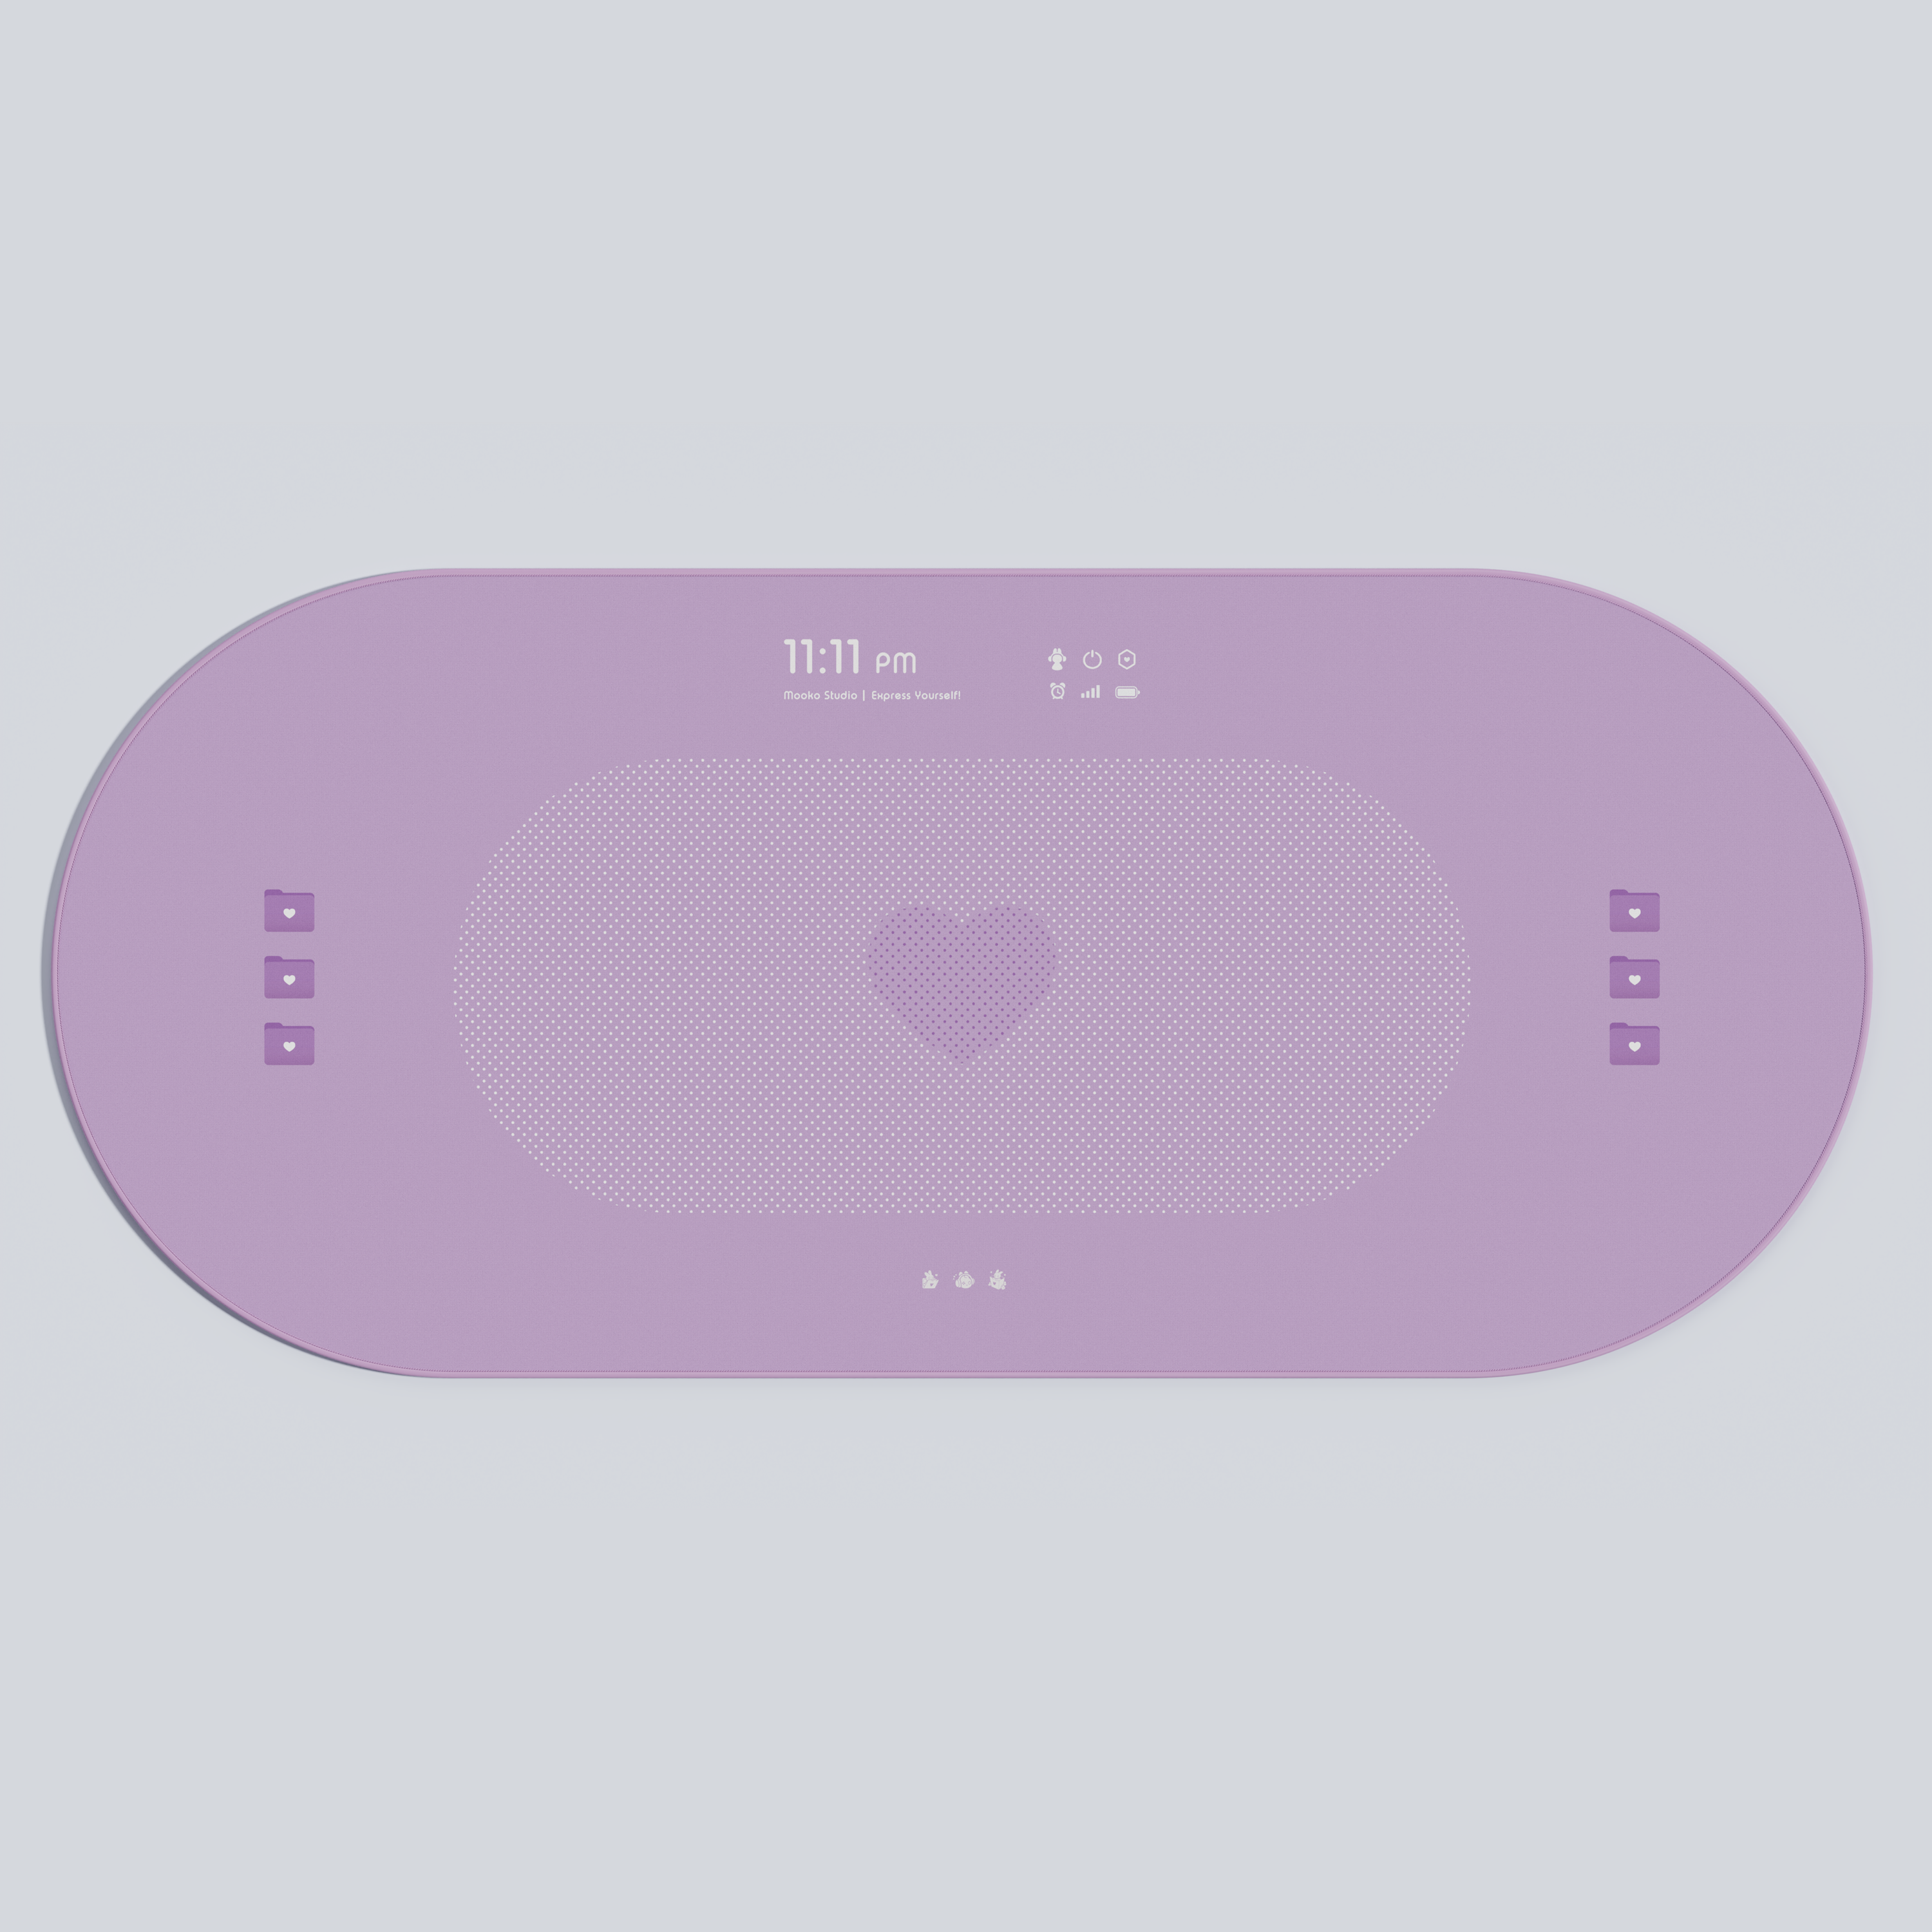 [COMING SOON] Cute Interface Deskmat - Purple